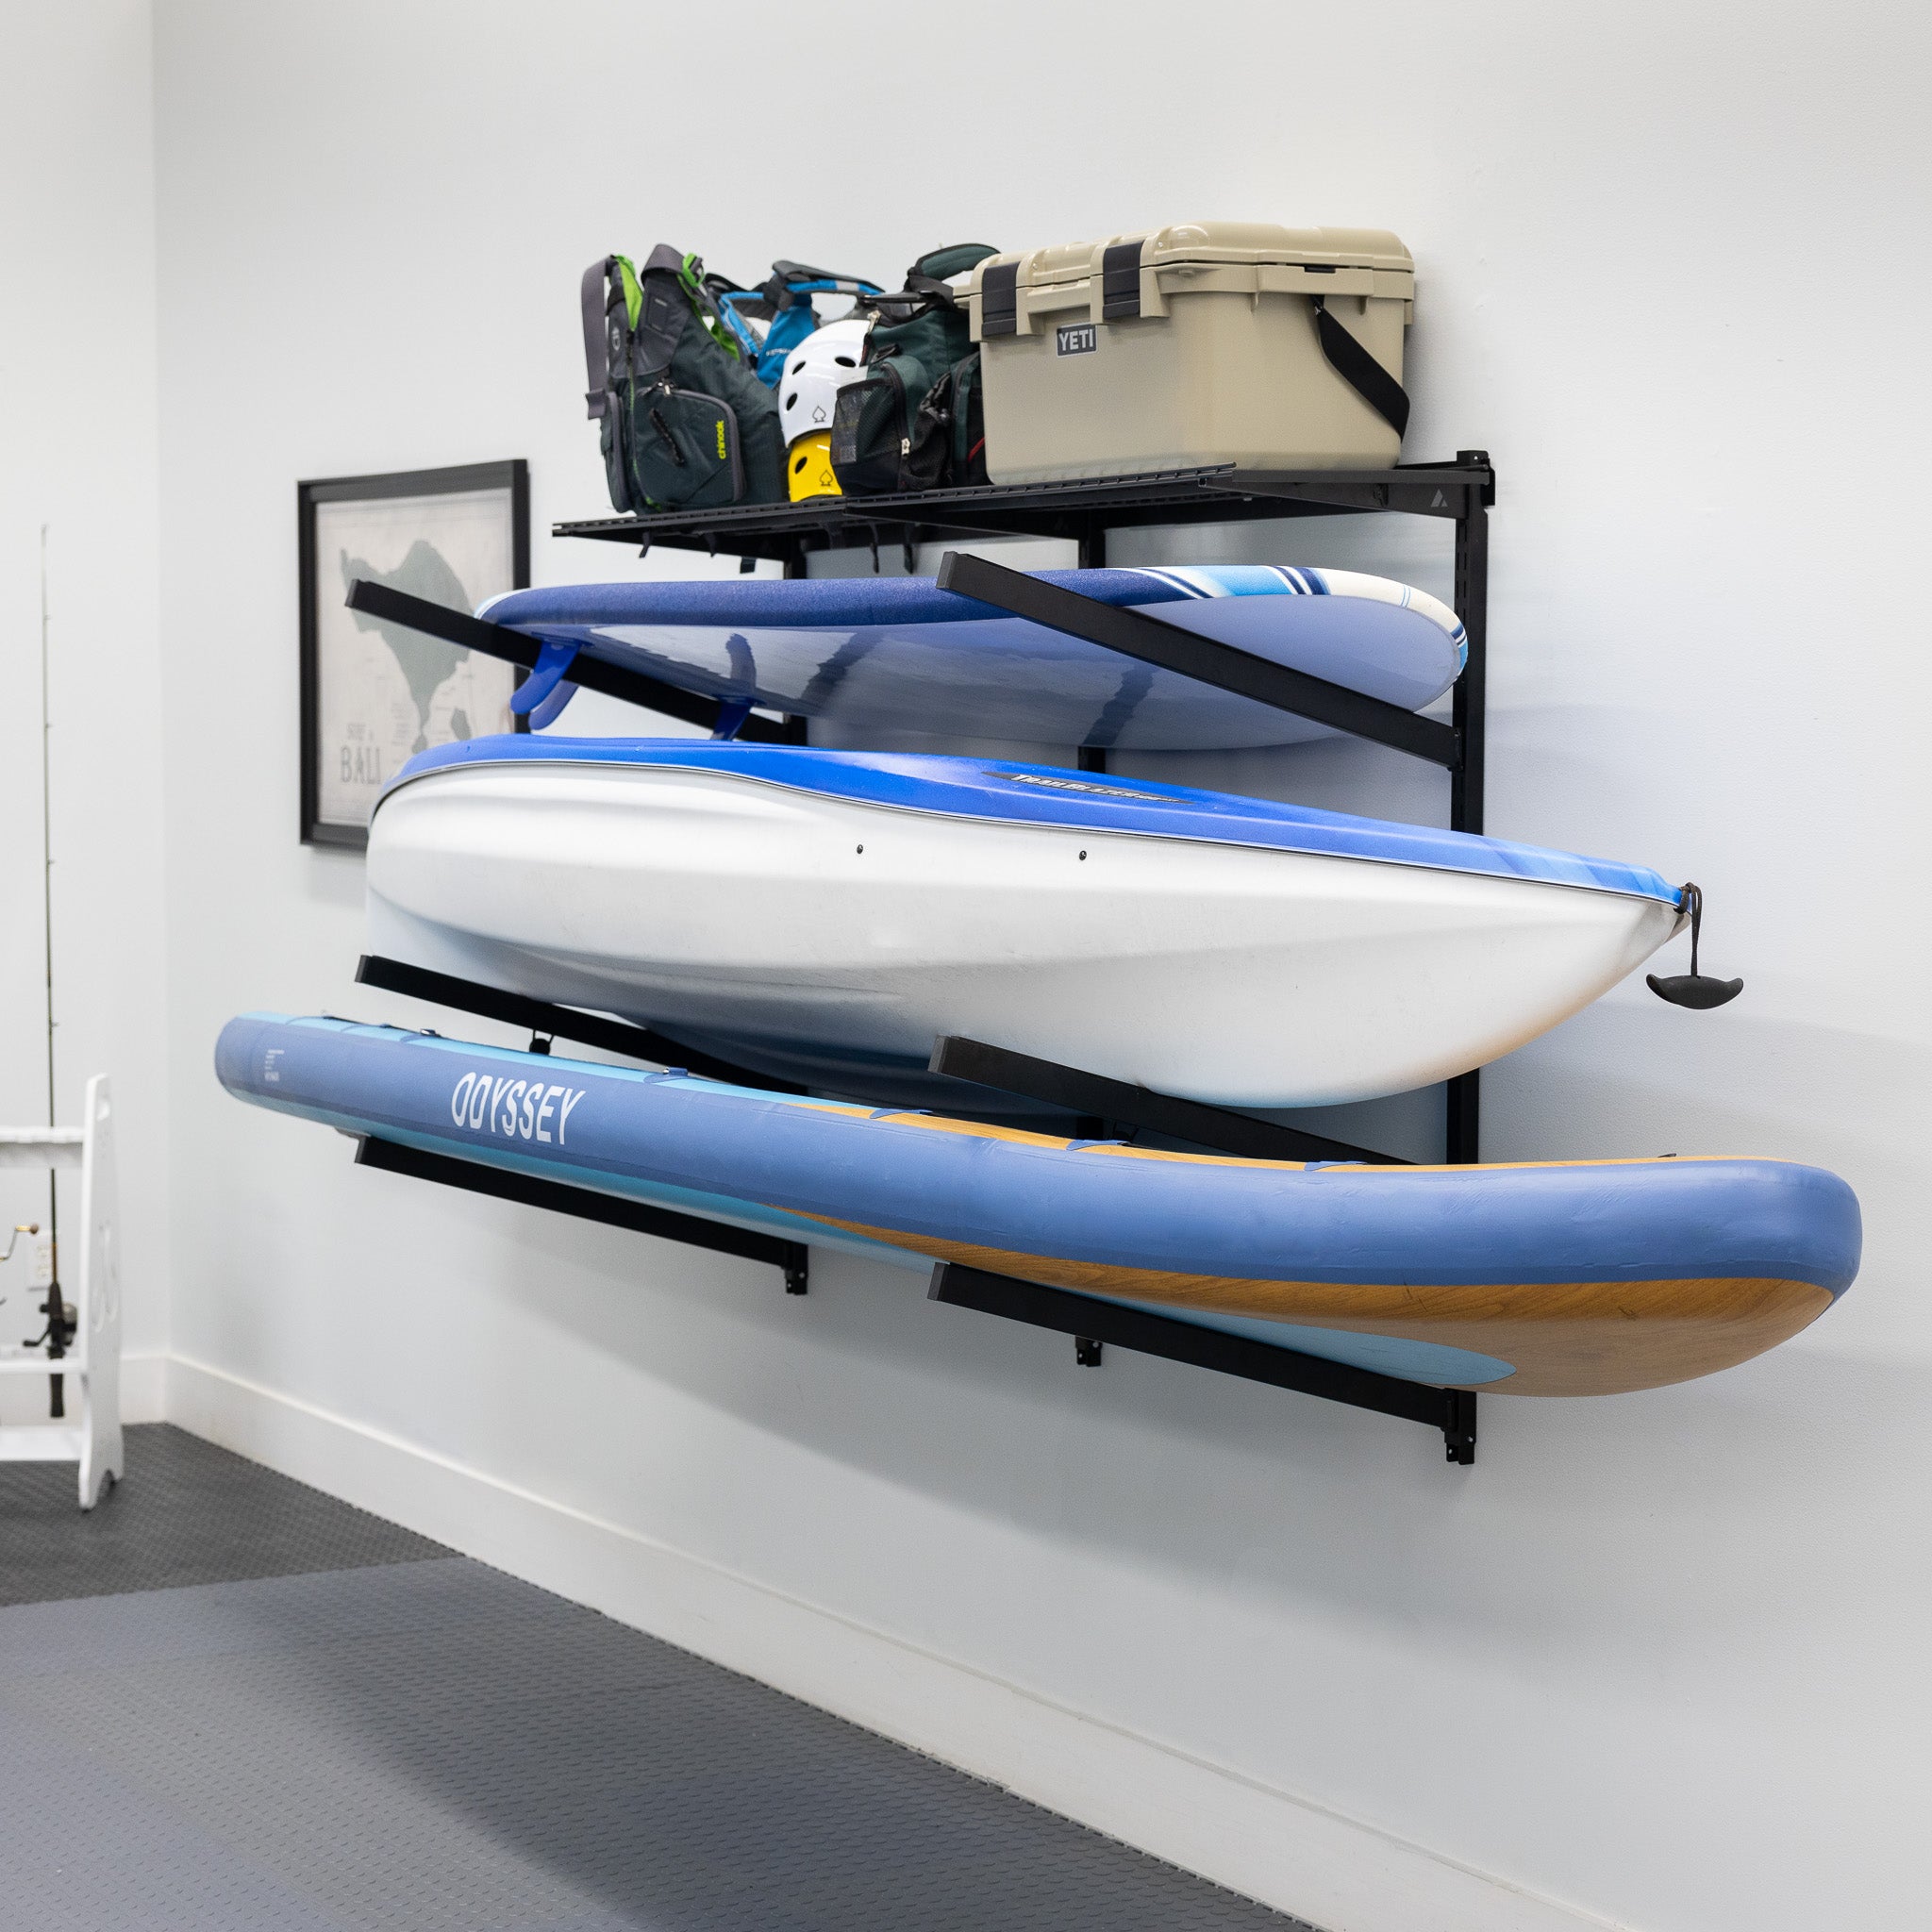 Kayak, SUP, Canoe or Paddle Board Wall Mounted Rack with Shelf